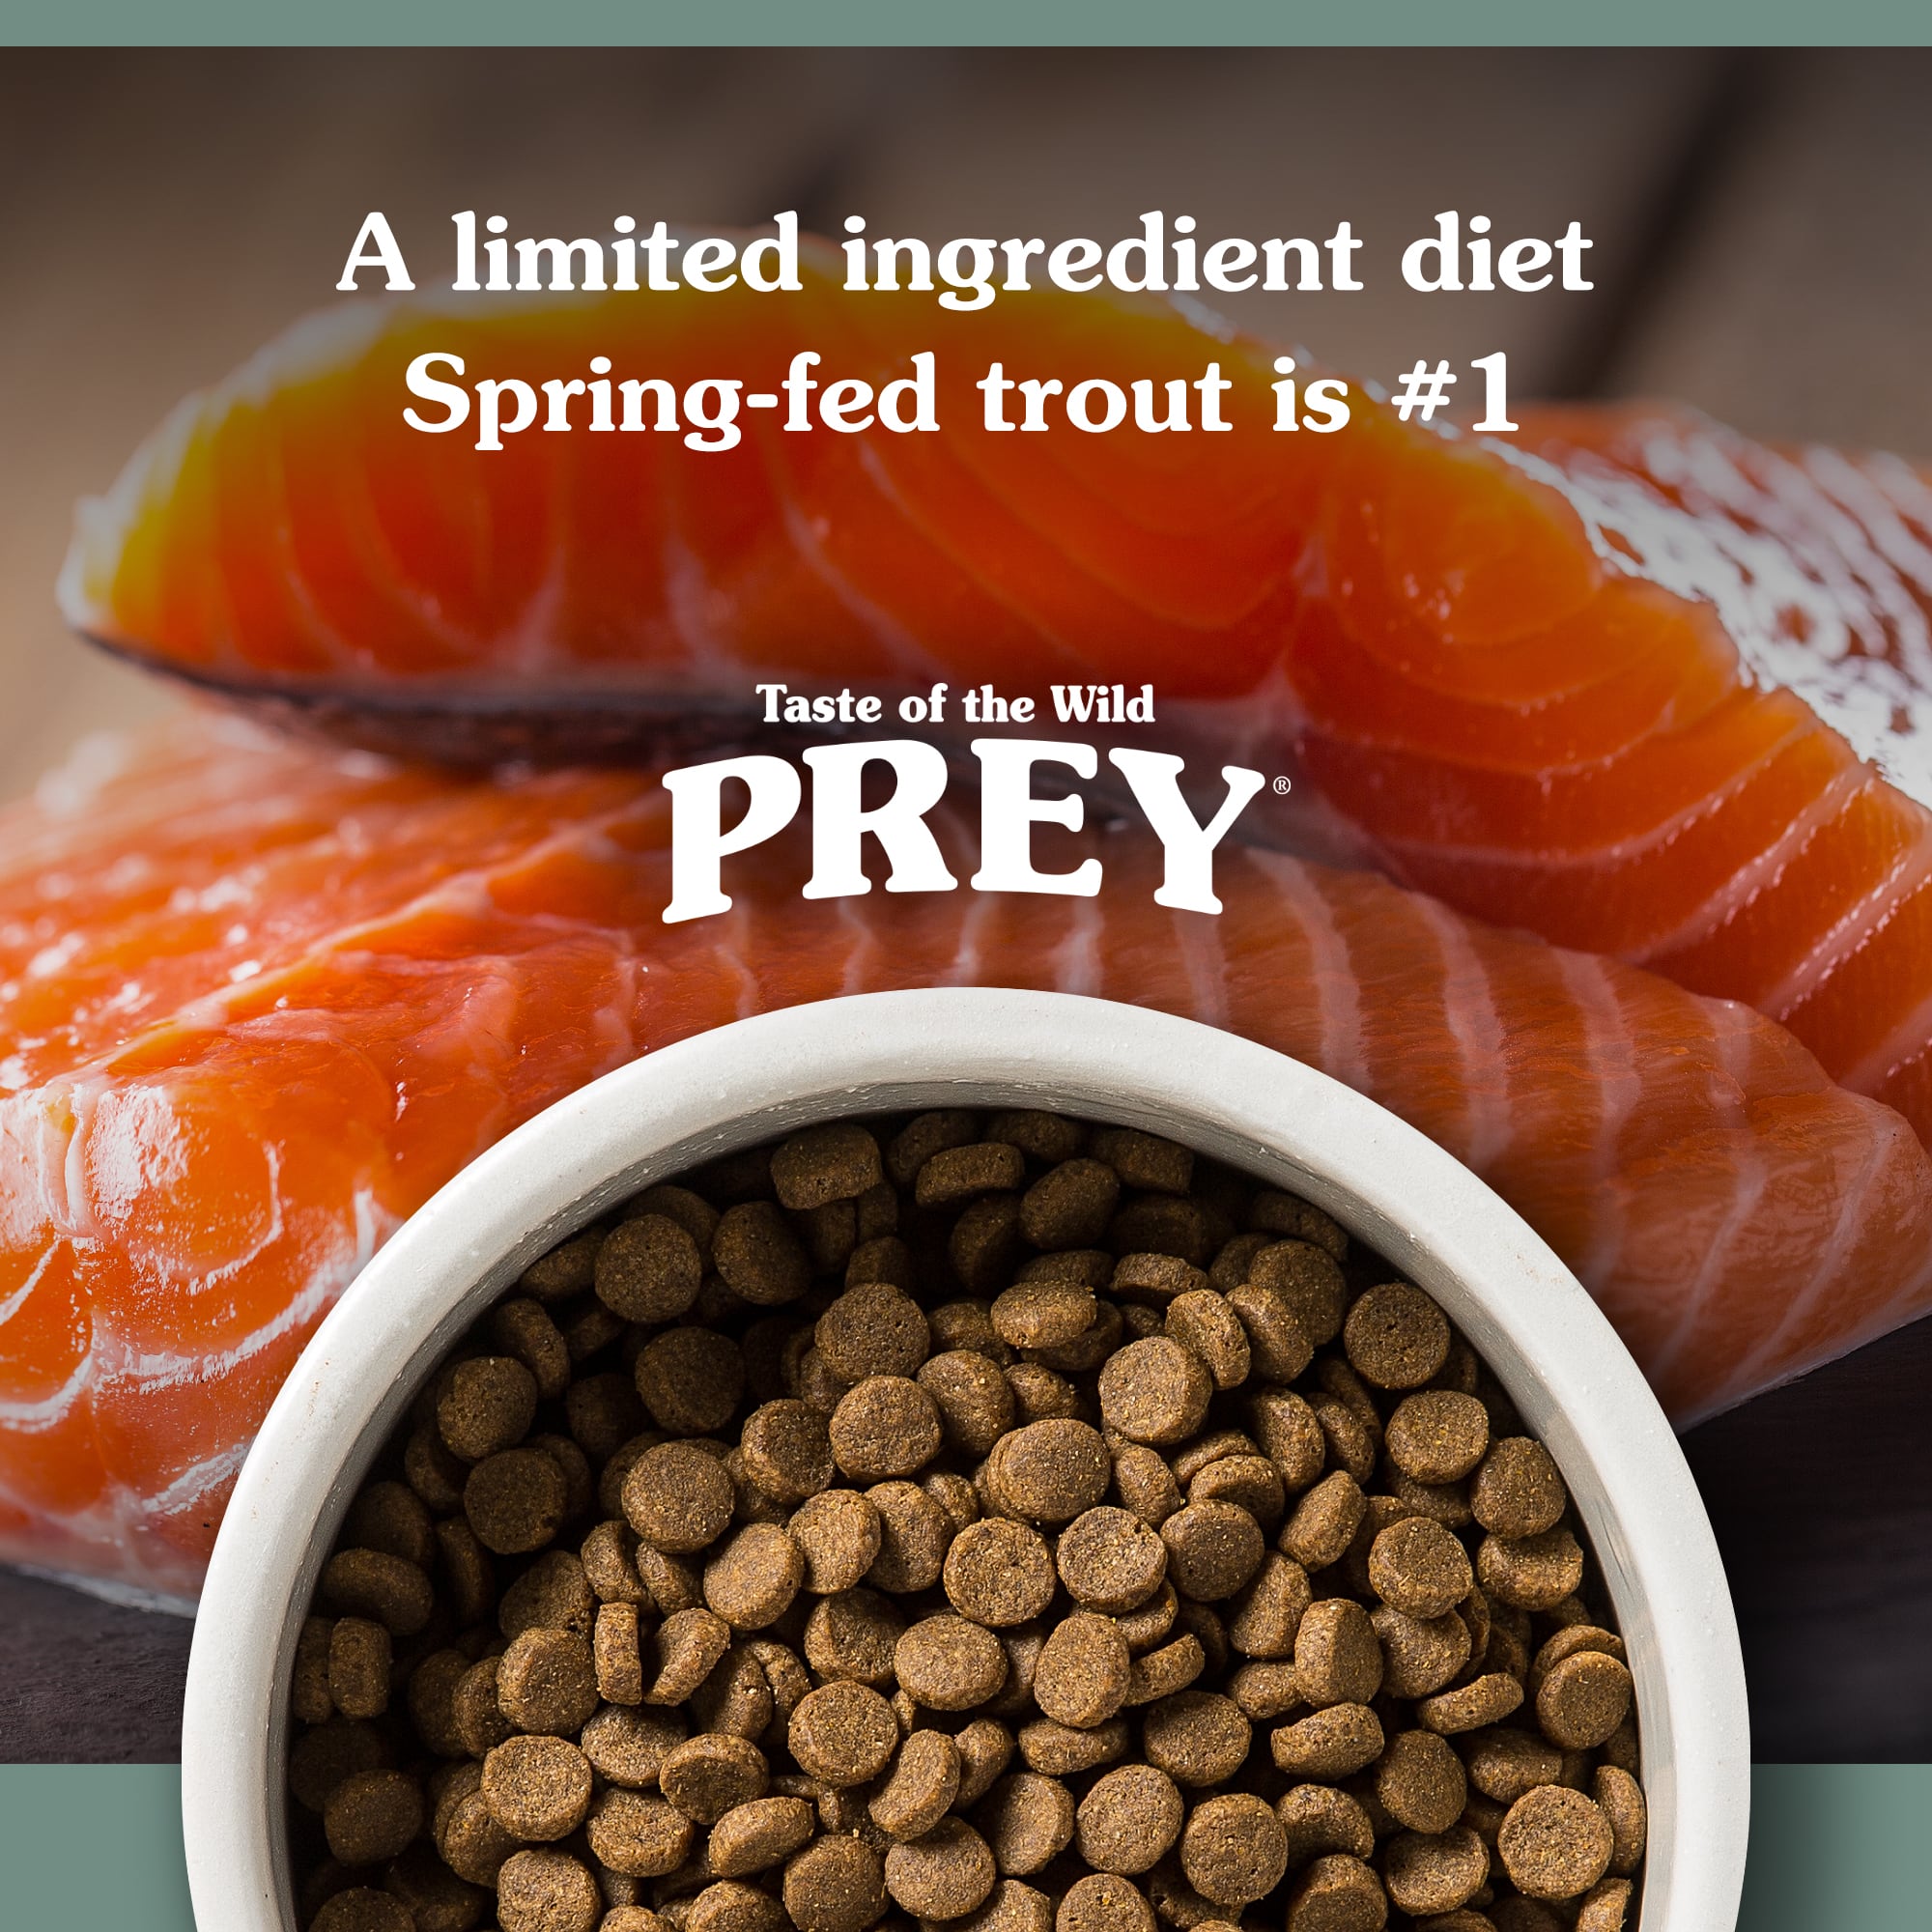 Taste Of The Wild Prey Trout Formula Grain-Free Dog Food - Mutts & Co.